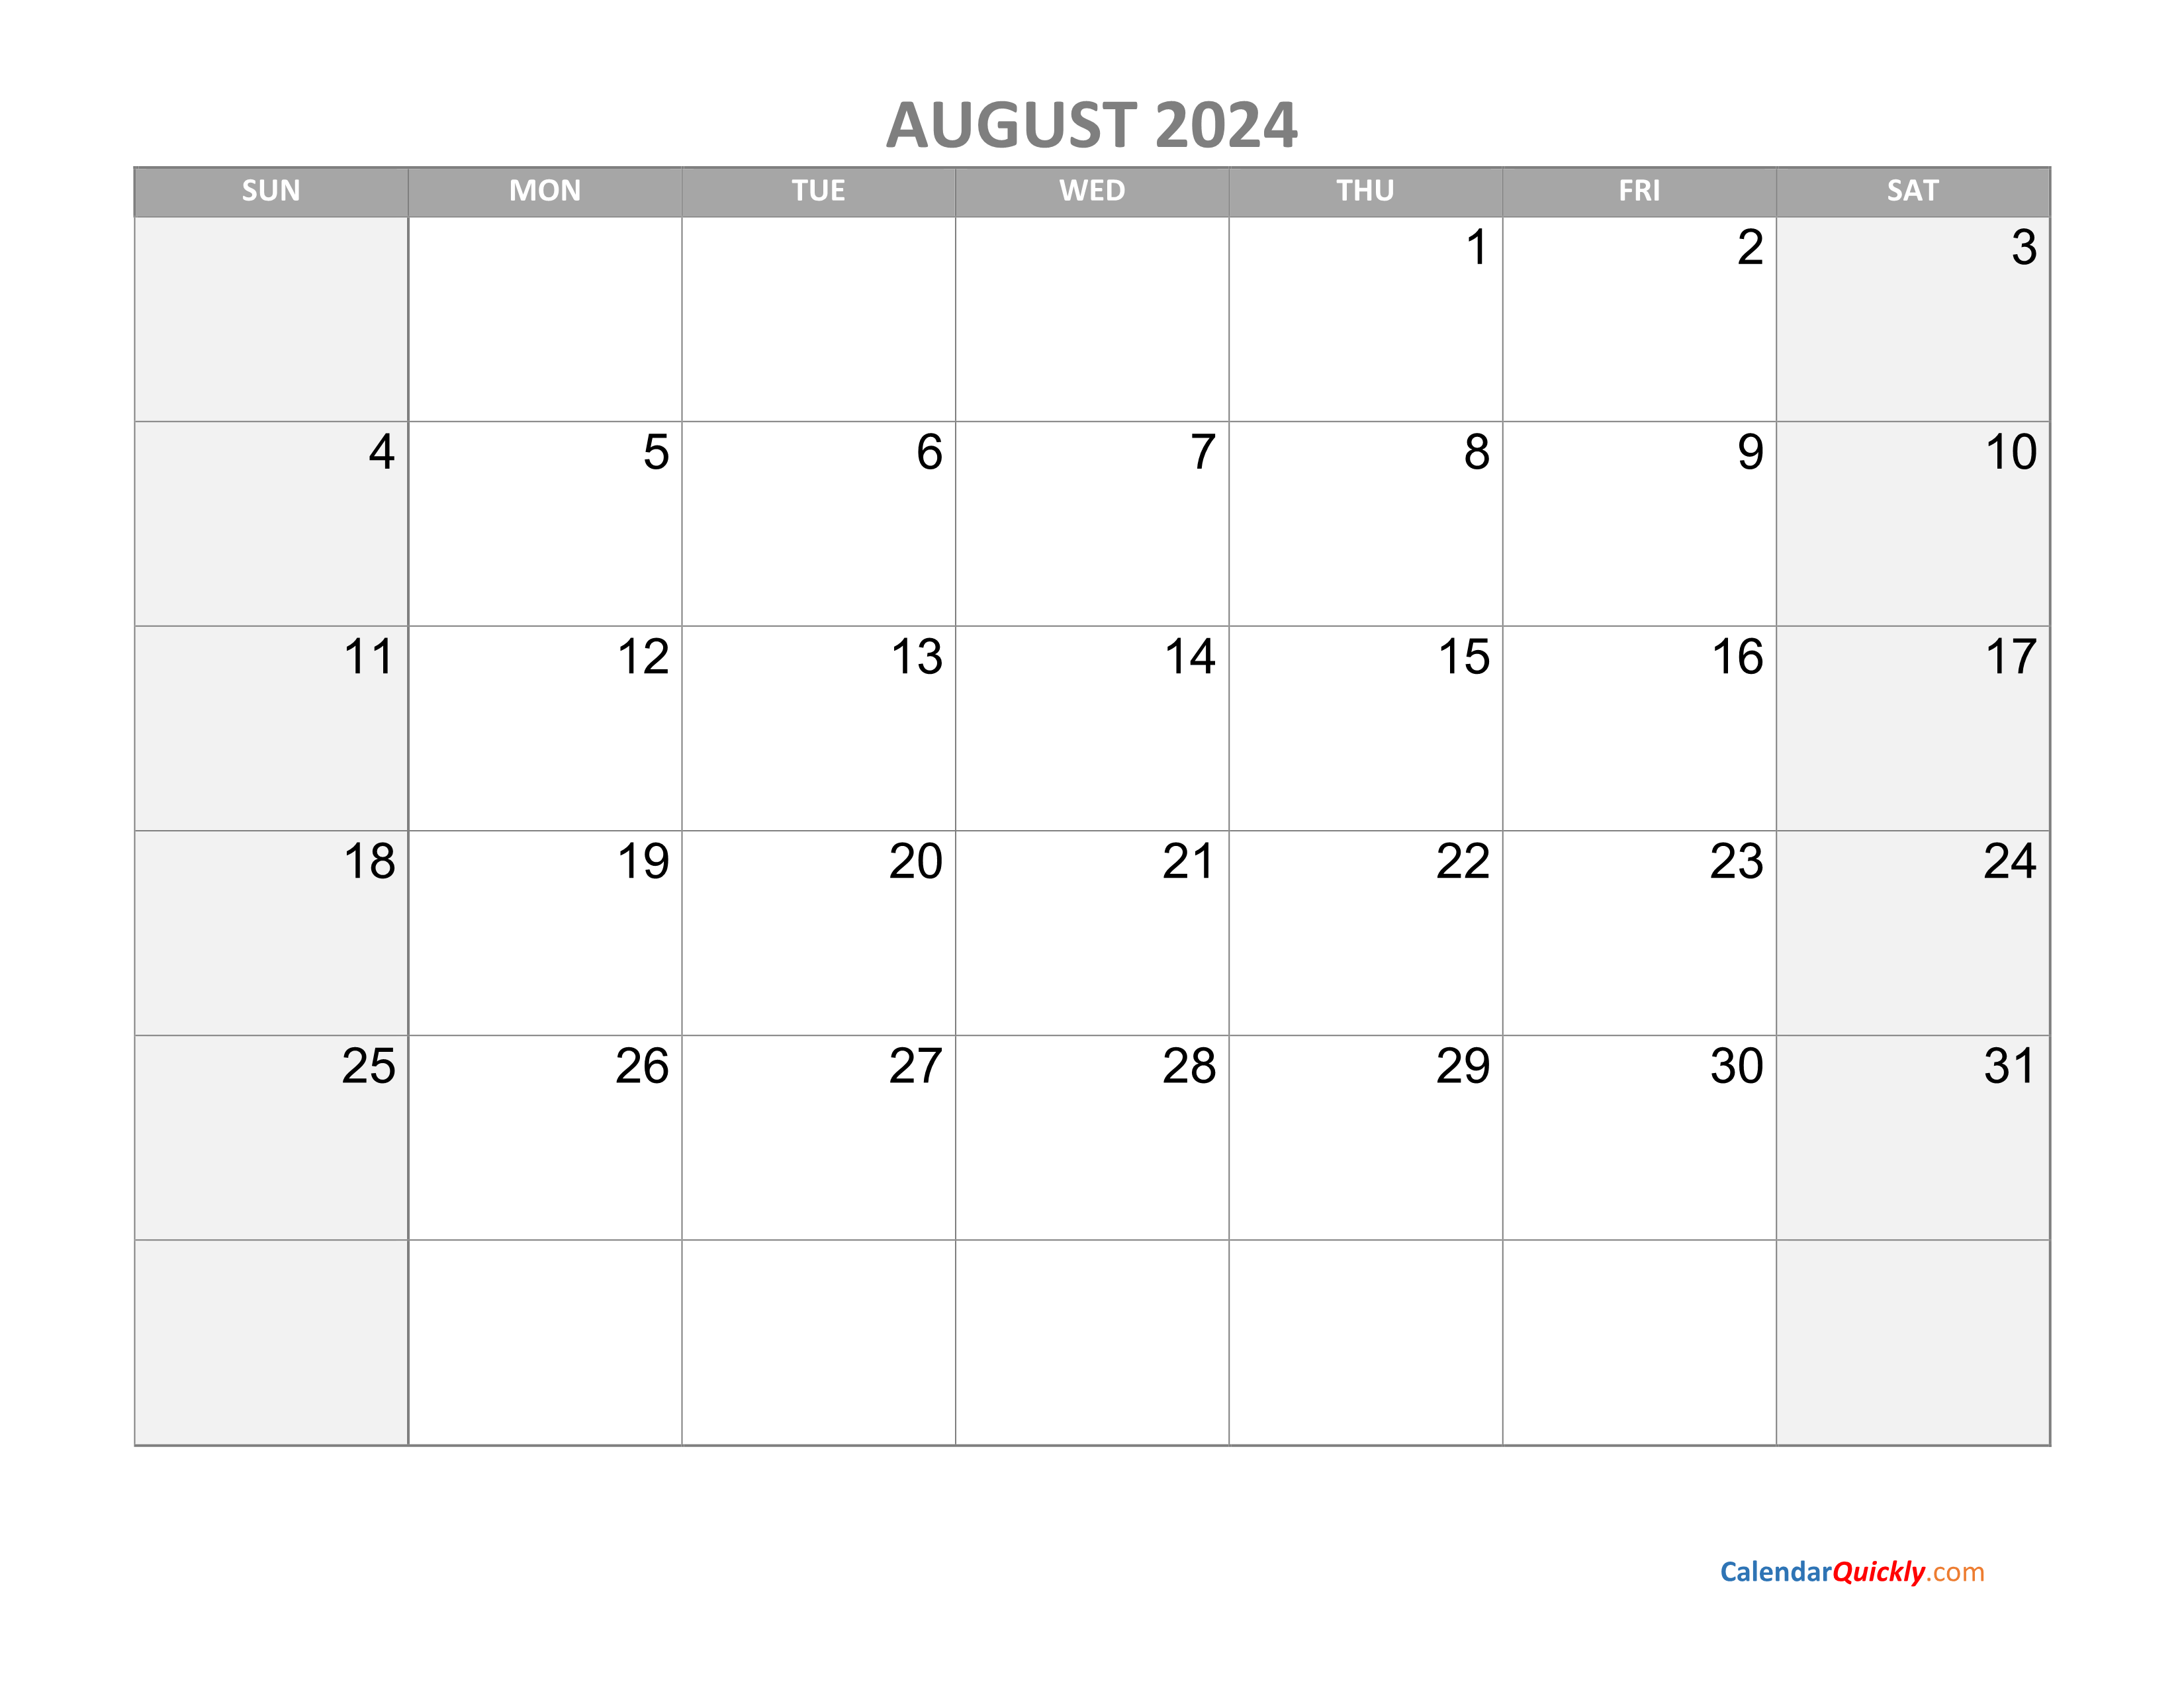 august-calendar-2024-with-holidays-calendar-quickly